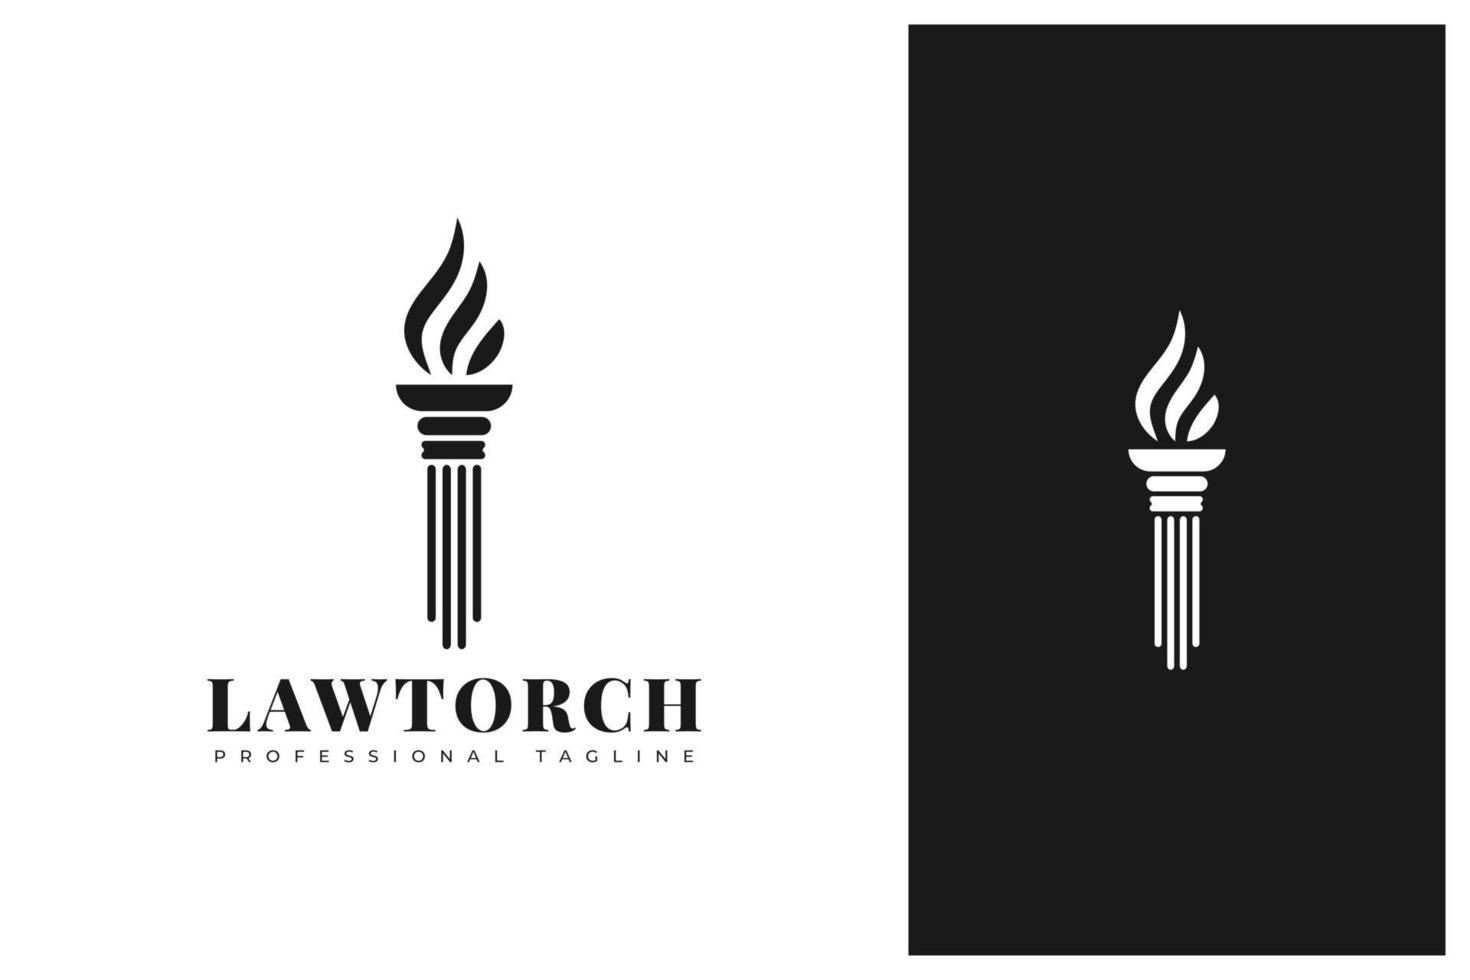 law torch logo design, pillar and torch vector